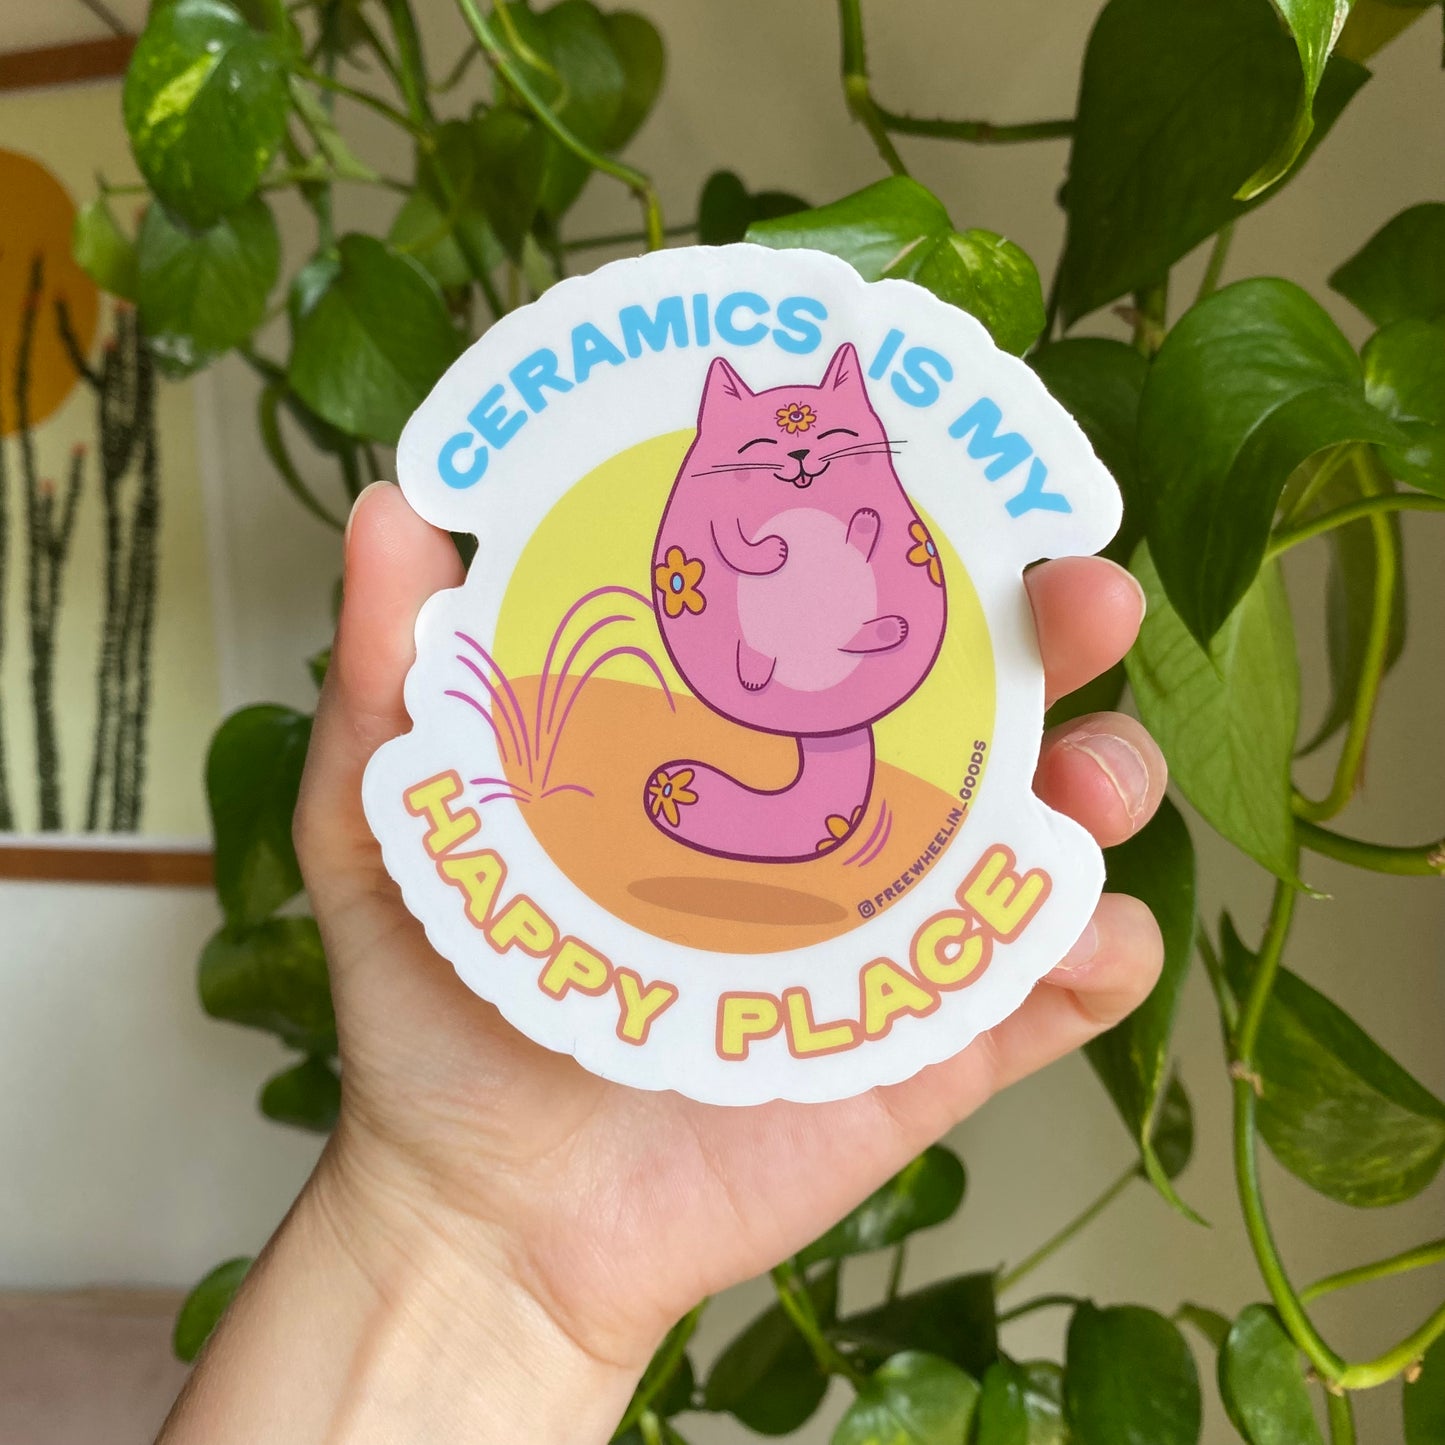 Ceramics is my Happy Place Sticker